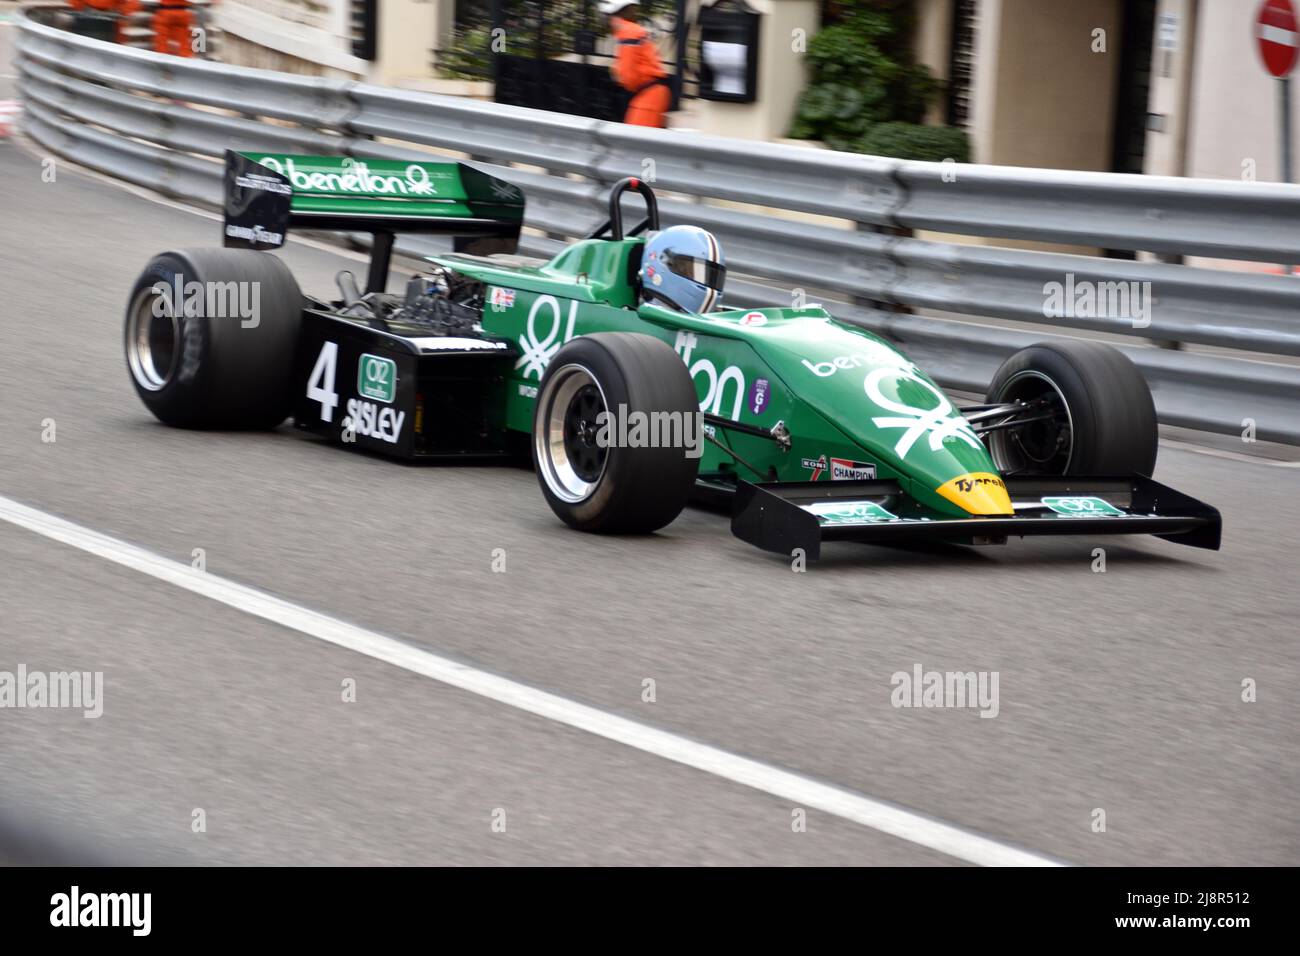 Historic monaco grand prix 2022 - saturday qualifying and sunday race Stock Photo